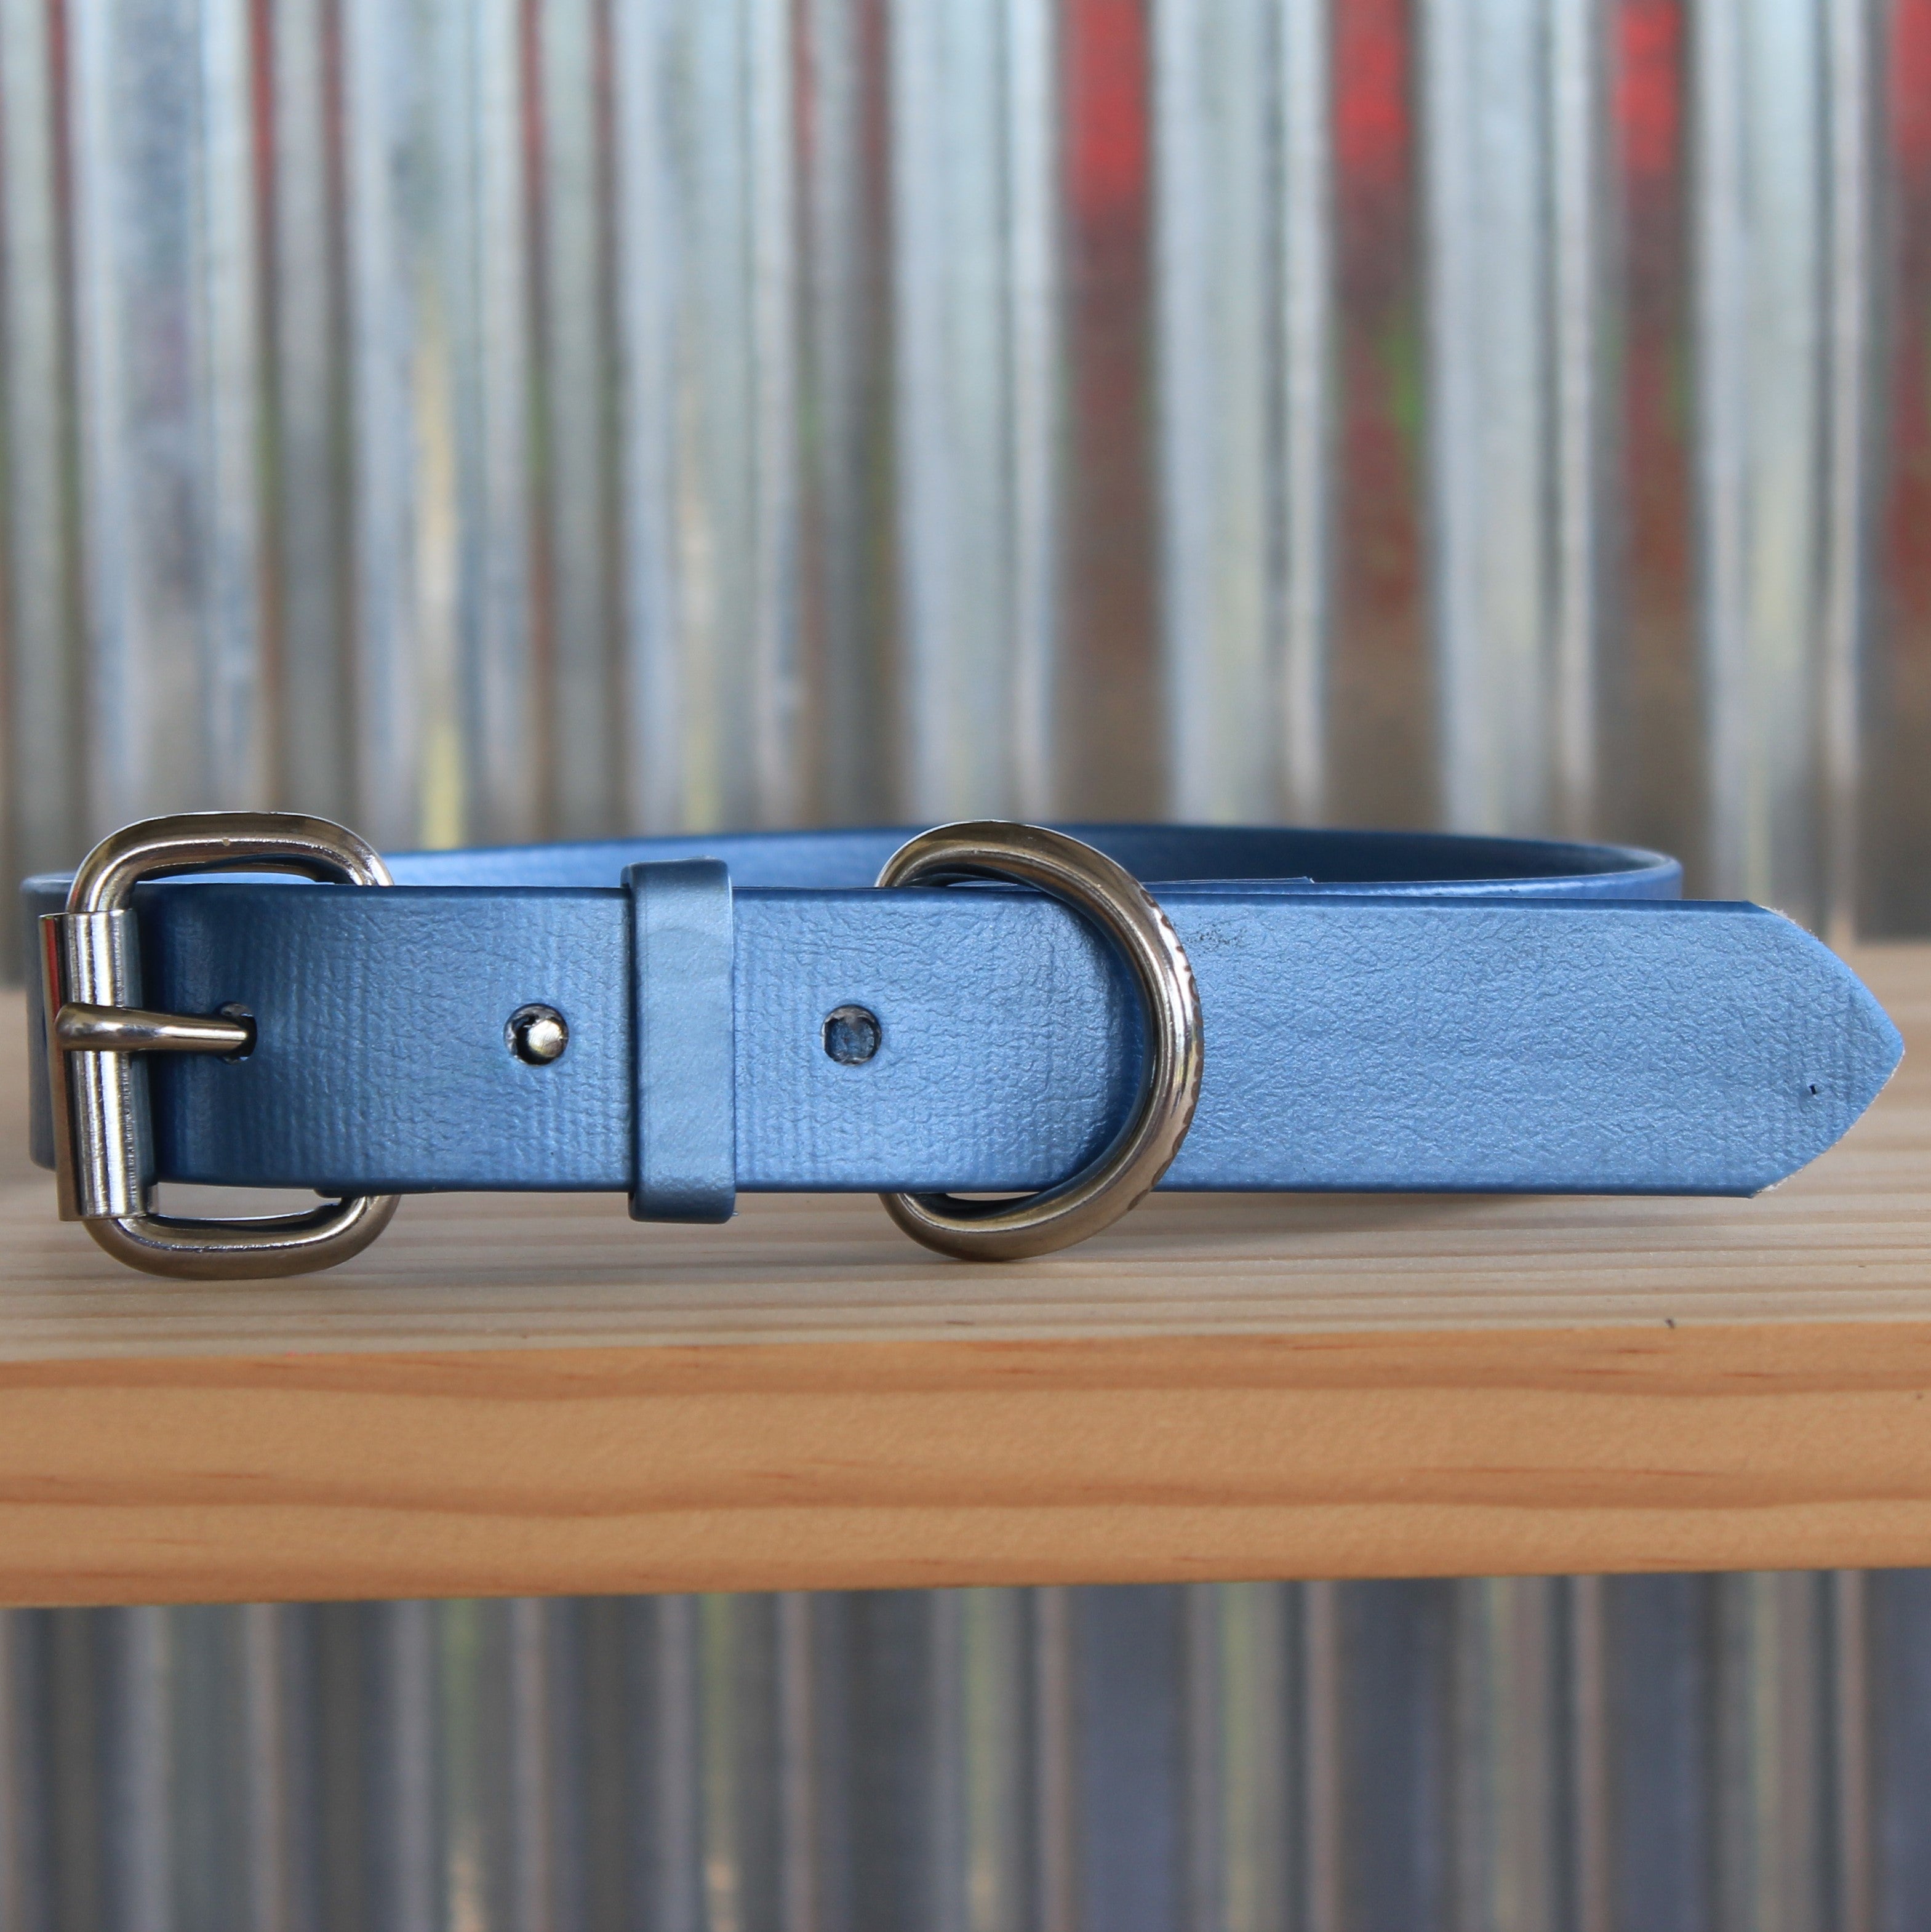 Sky Blue (Royal Blue) Dog Collar – Coopers Collars